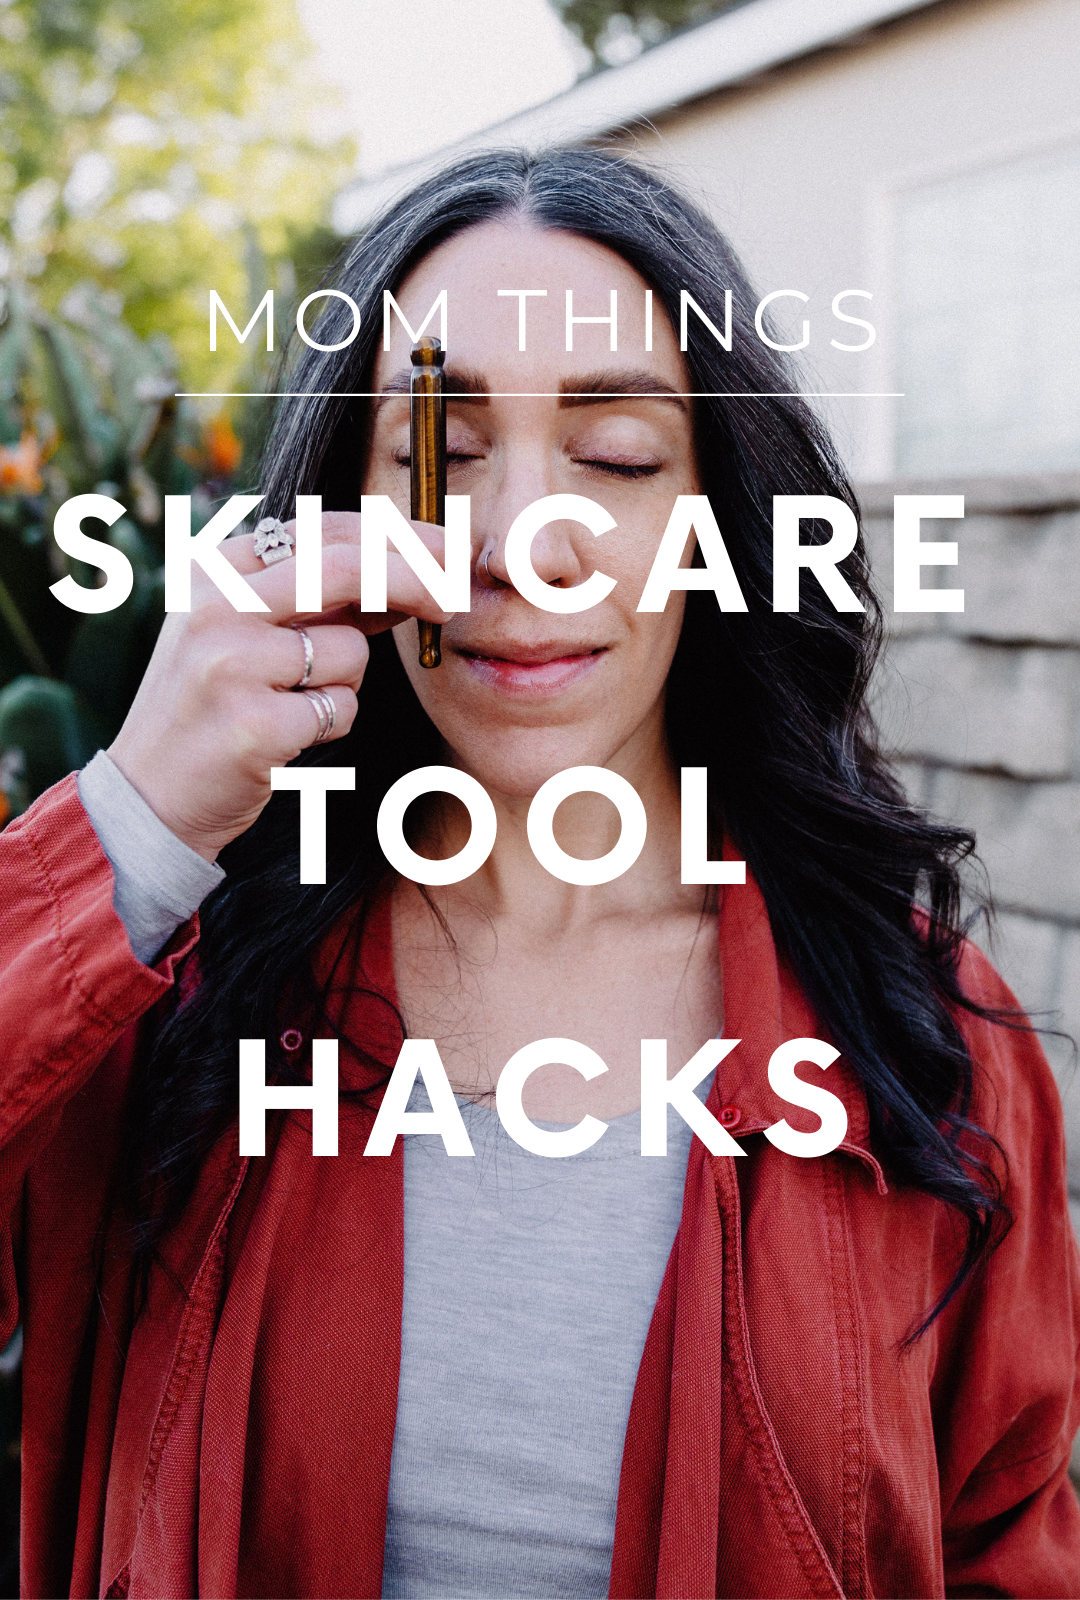 Mom Things- Skincare Tool Hacks